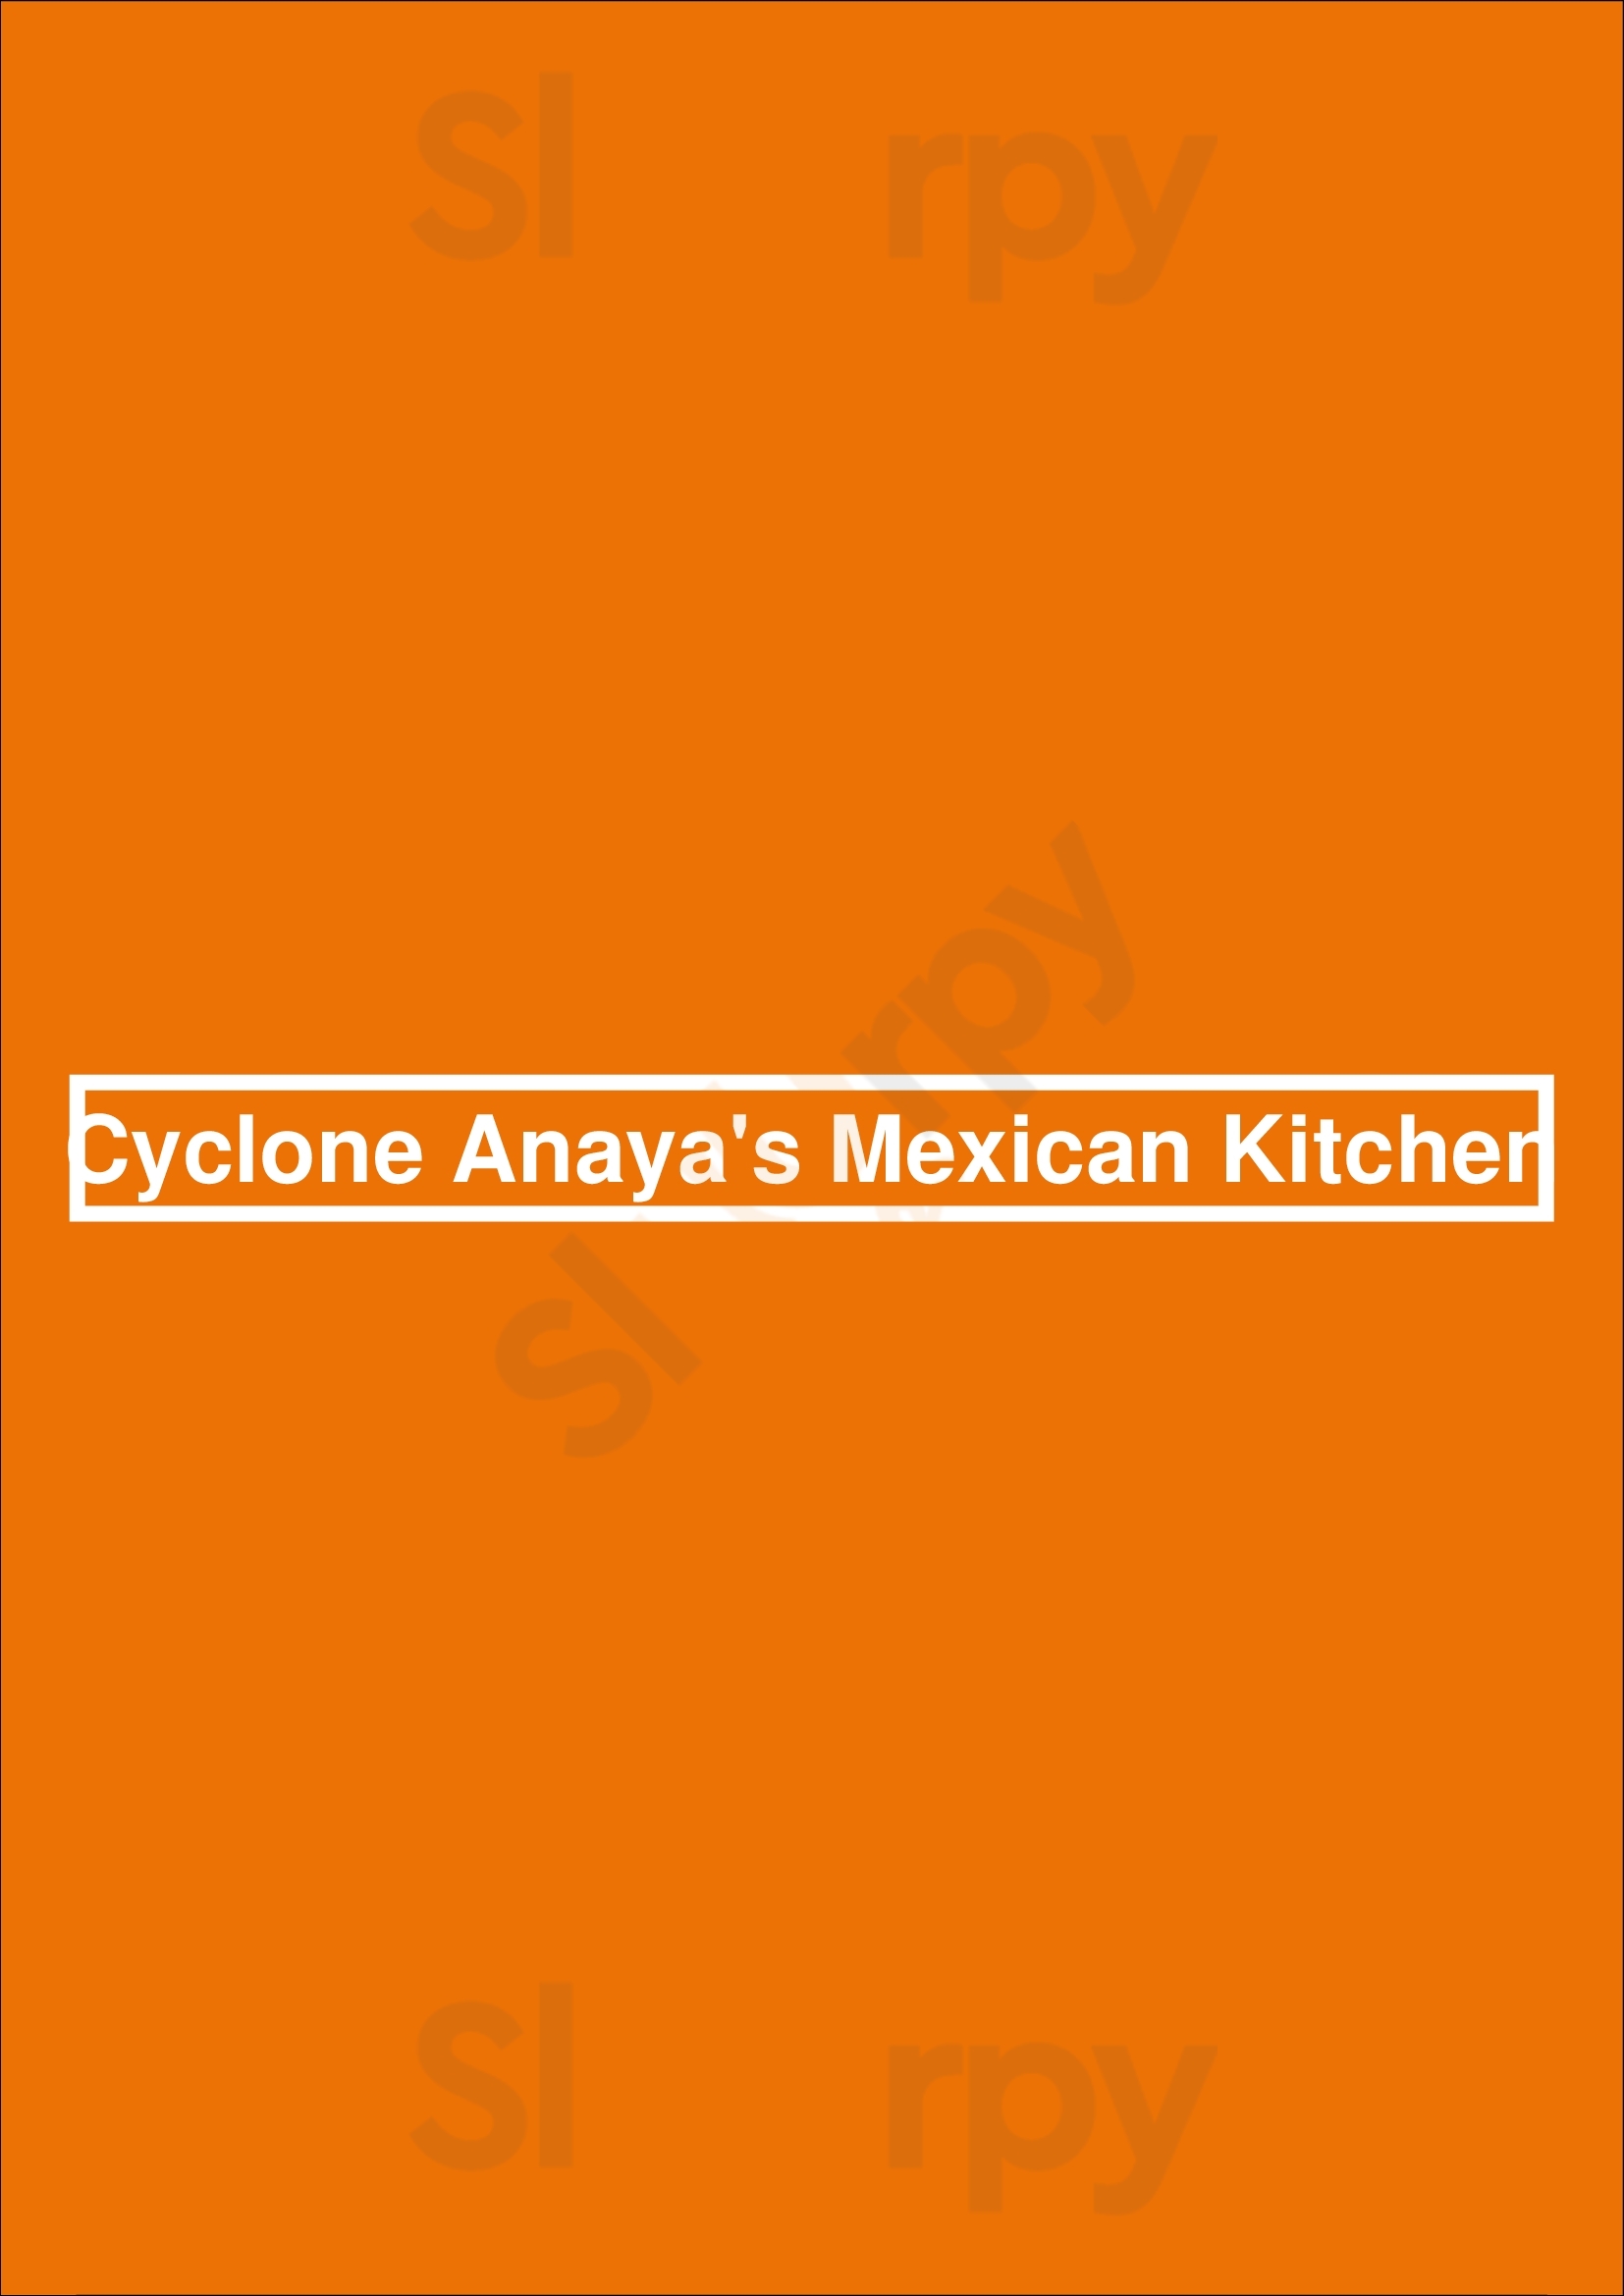 Cyclone Anaya's Mexican Kitchen Houston Menu - 1